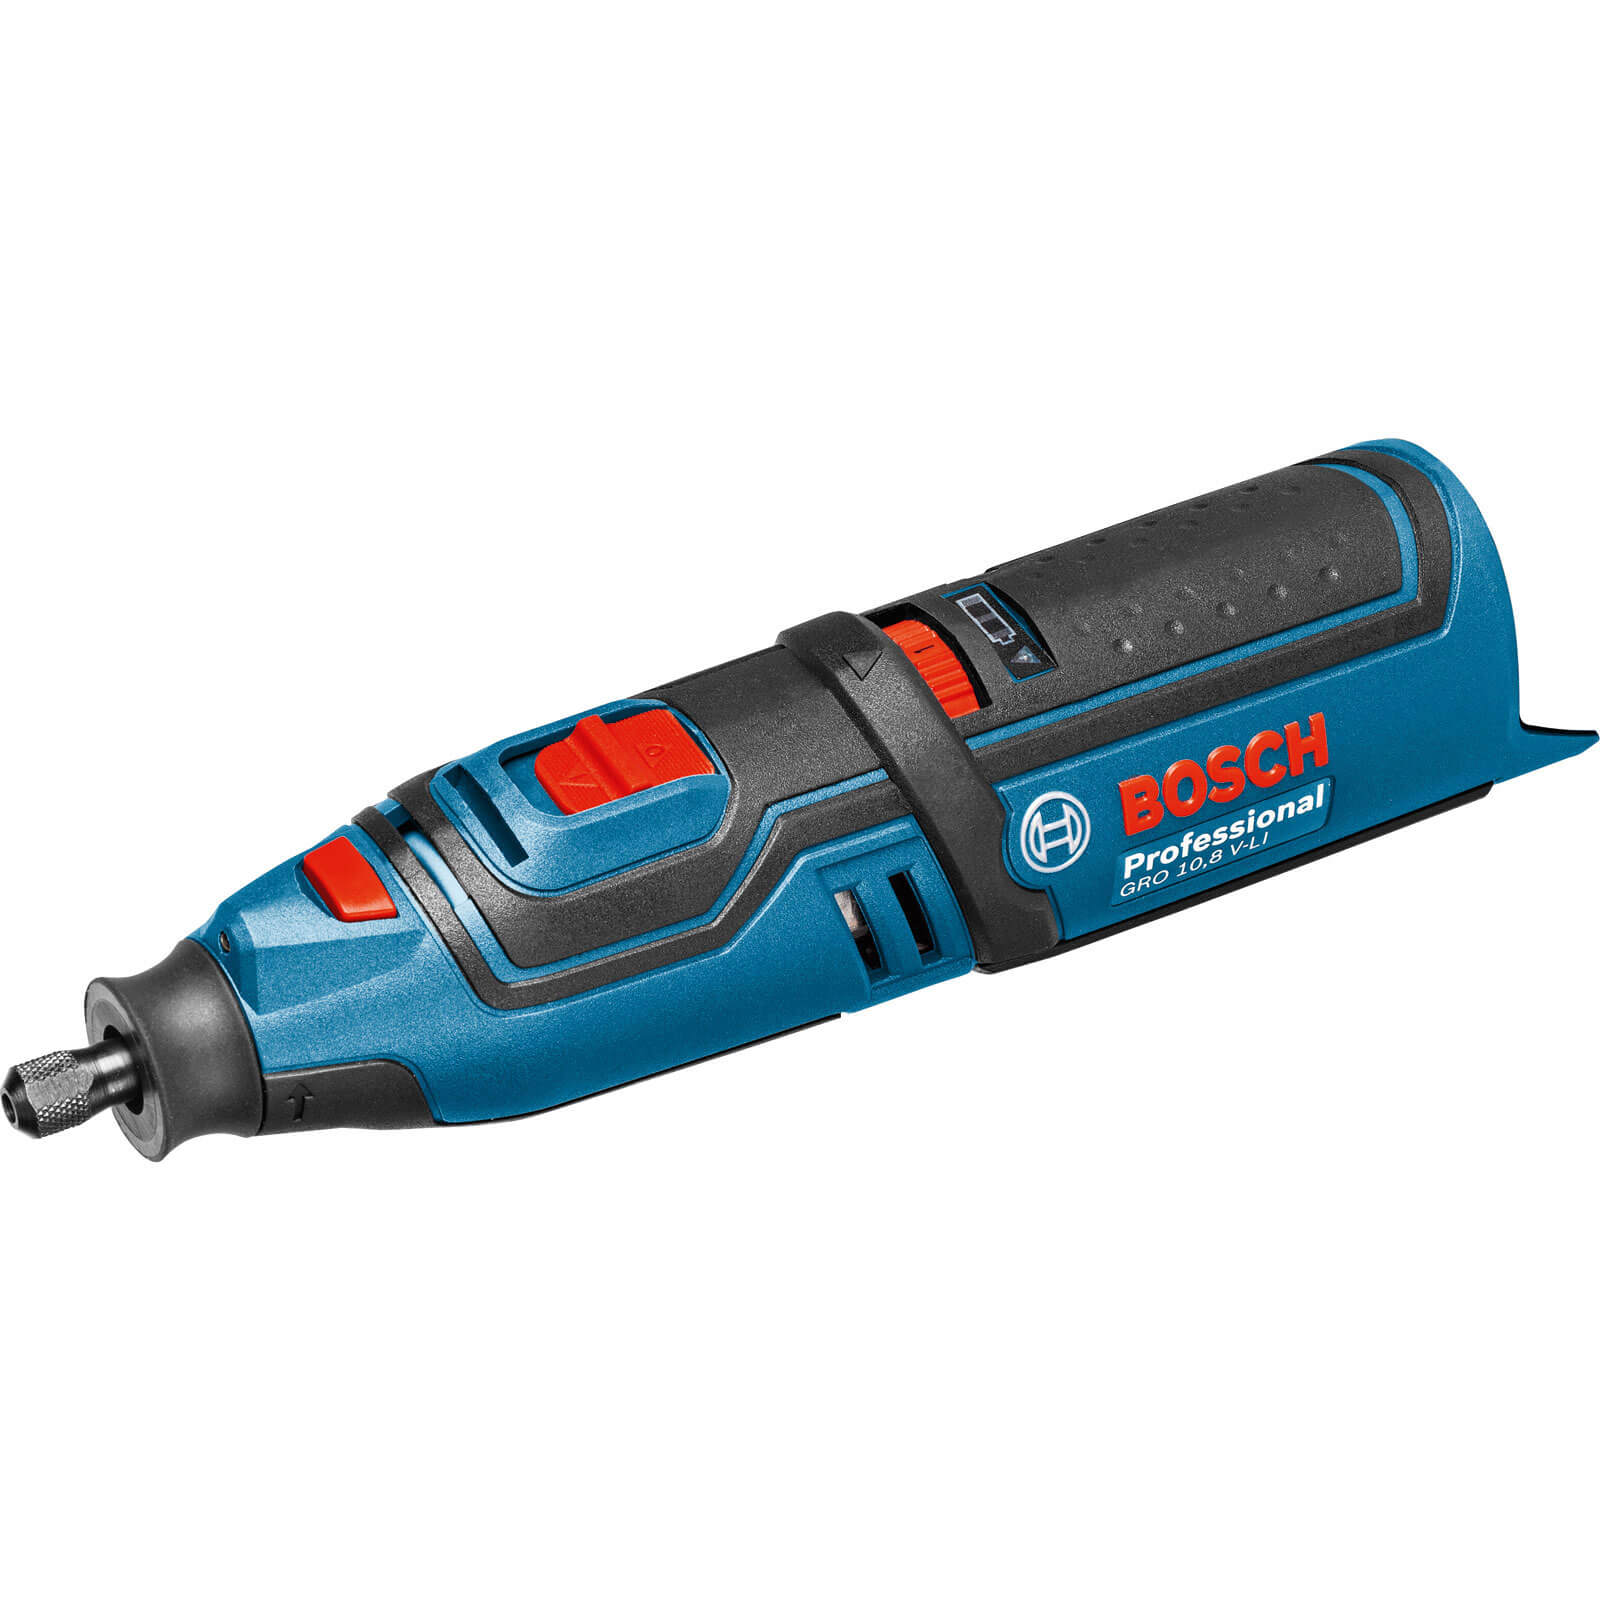 Photo of Bosch Gro 12 V-li 12v Cordless Rotary Multi Tool No Batteries No Charger No Case